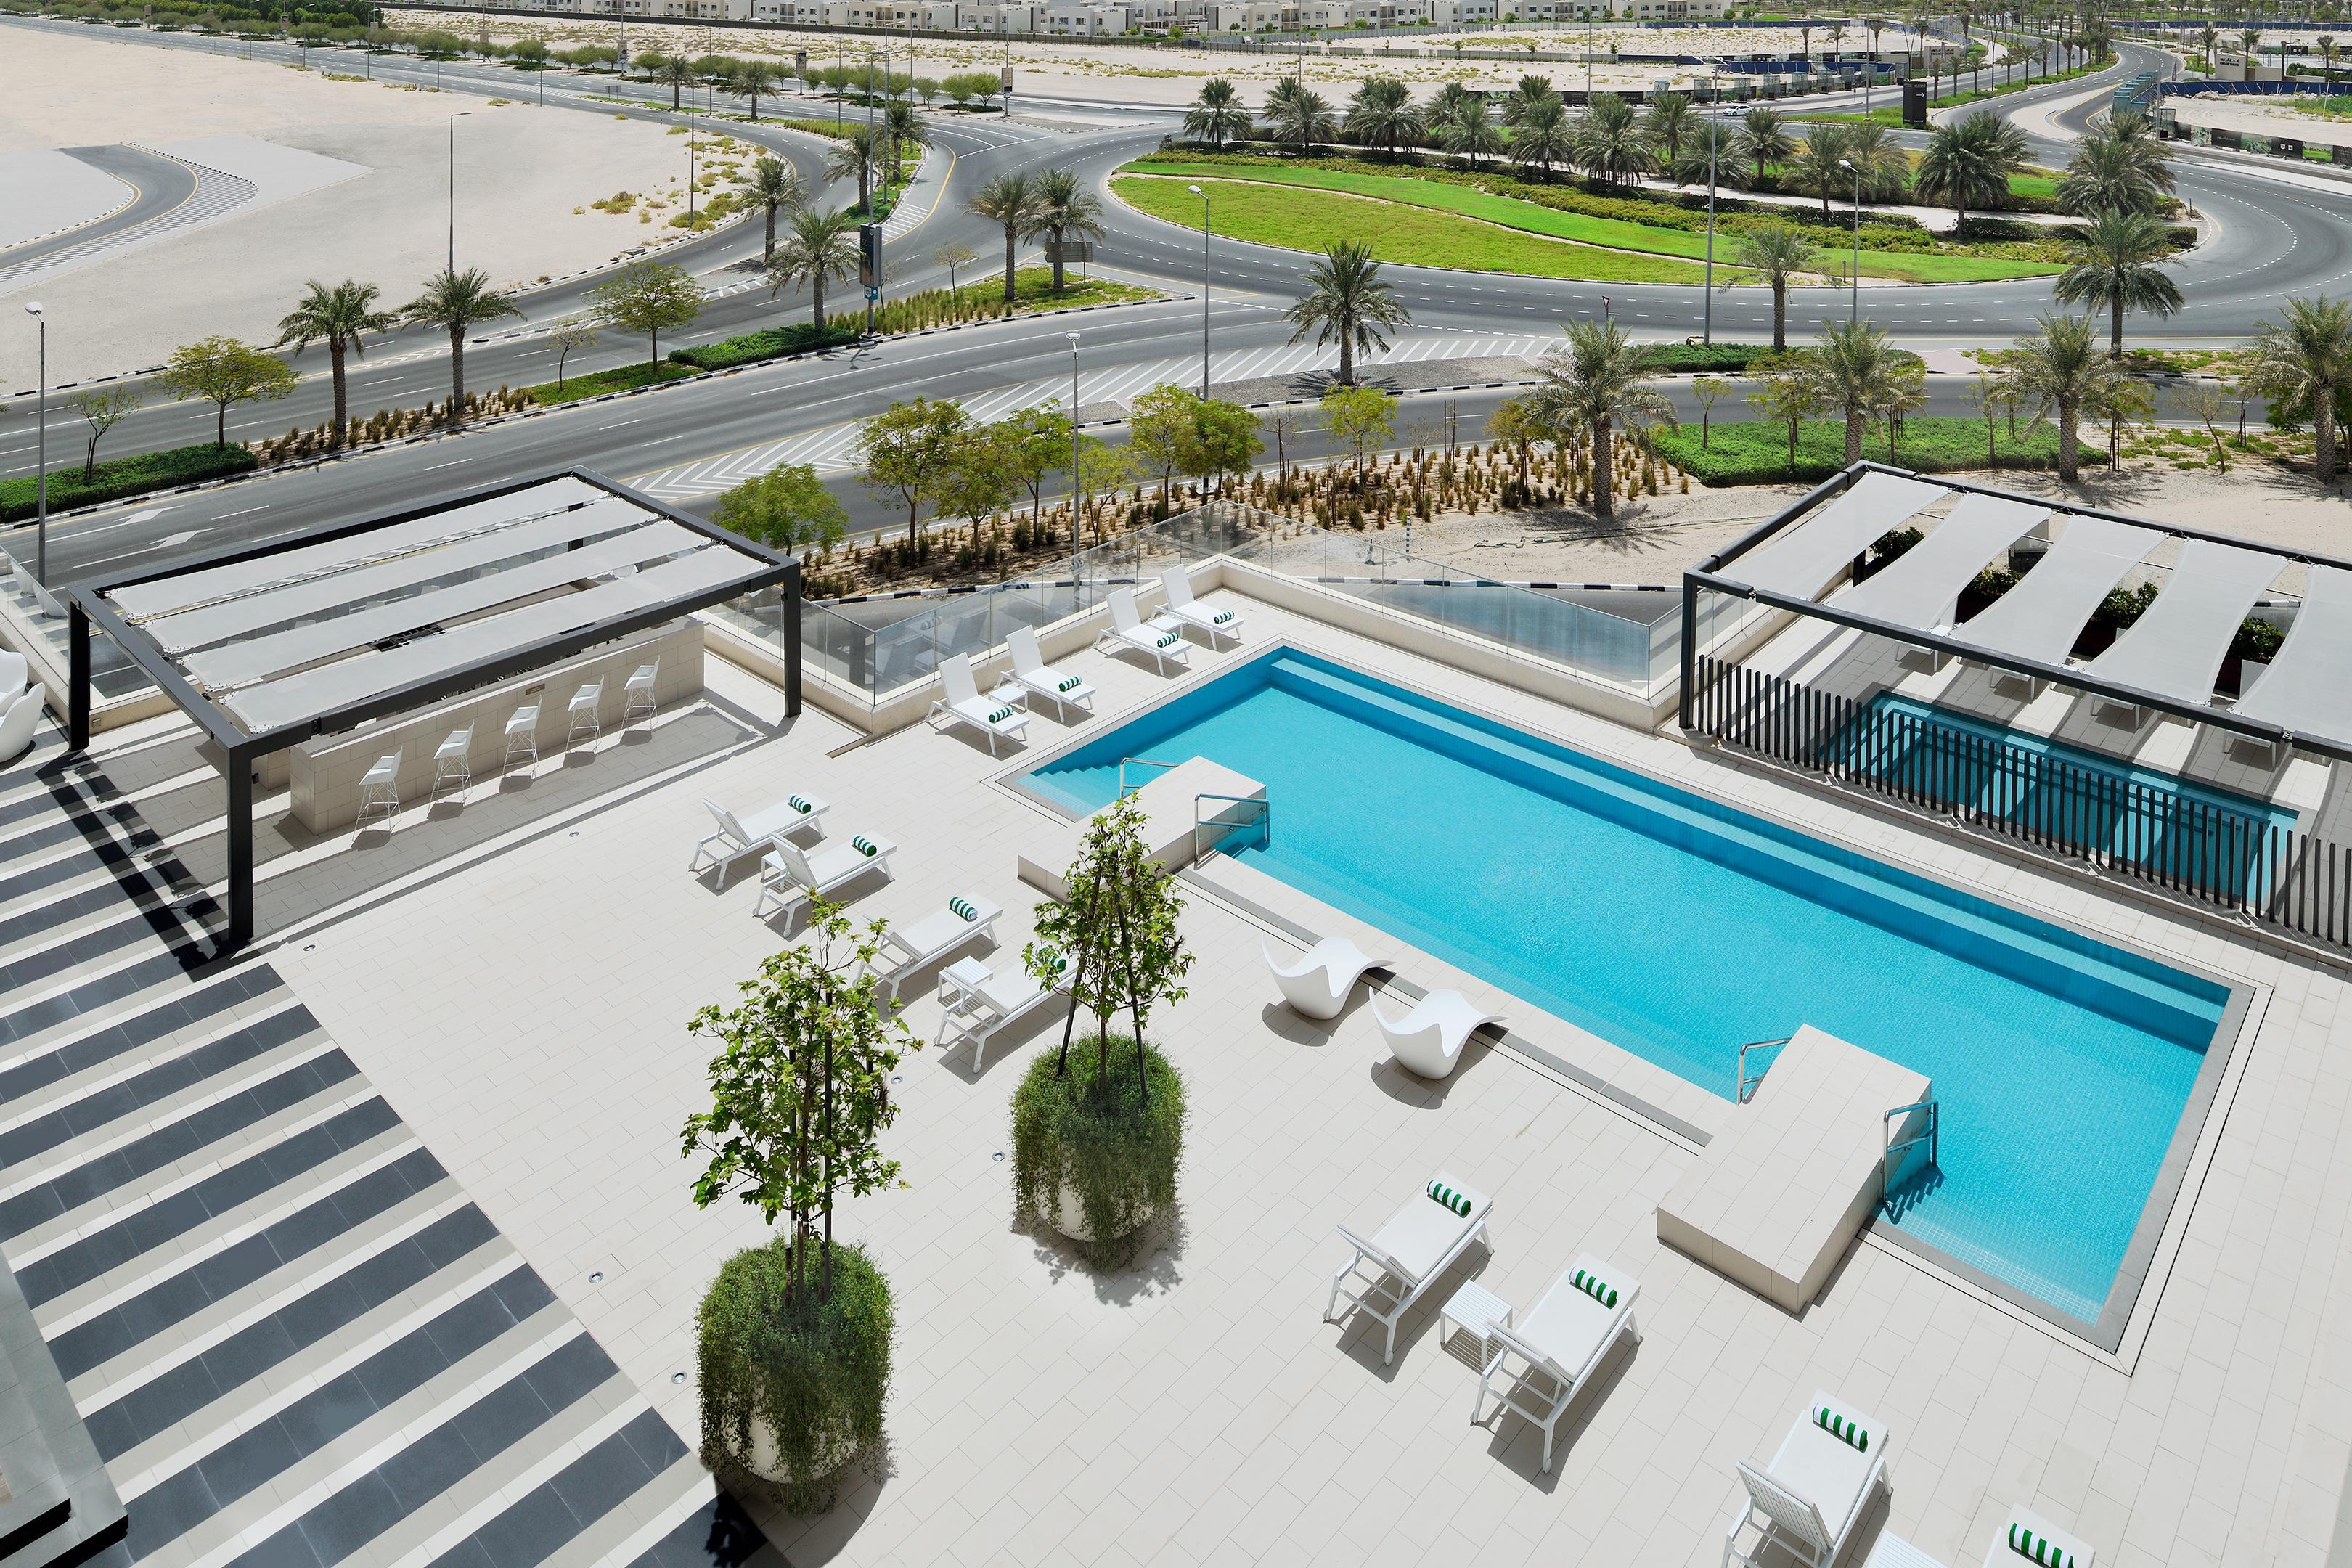 Holiday Inn Dubai al Maktoum Airport 4*